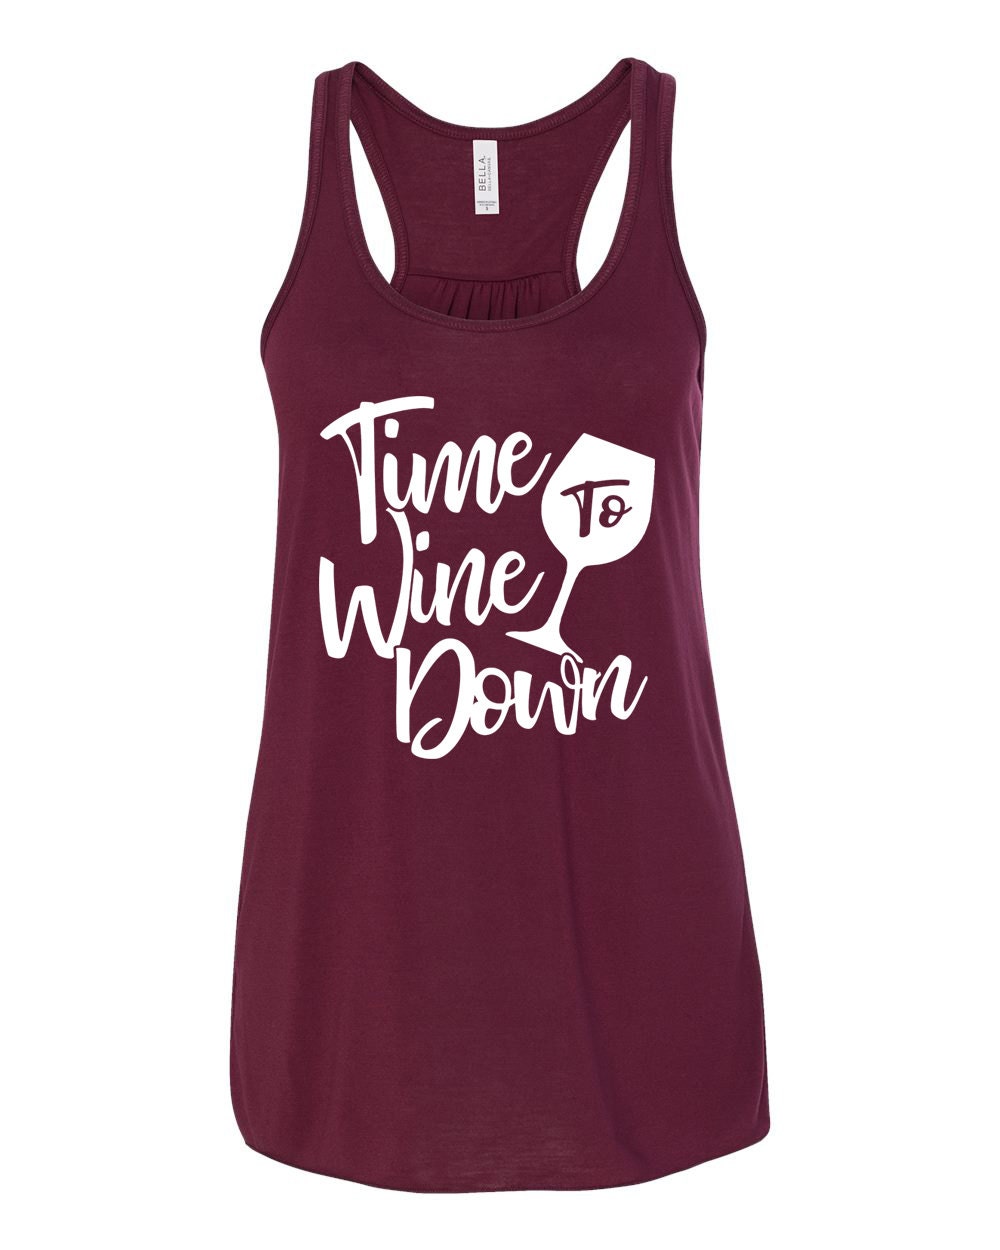 Time To Wine Down, Wine Tank, Funny Wine Shirt, Cute Wine Shirt